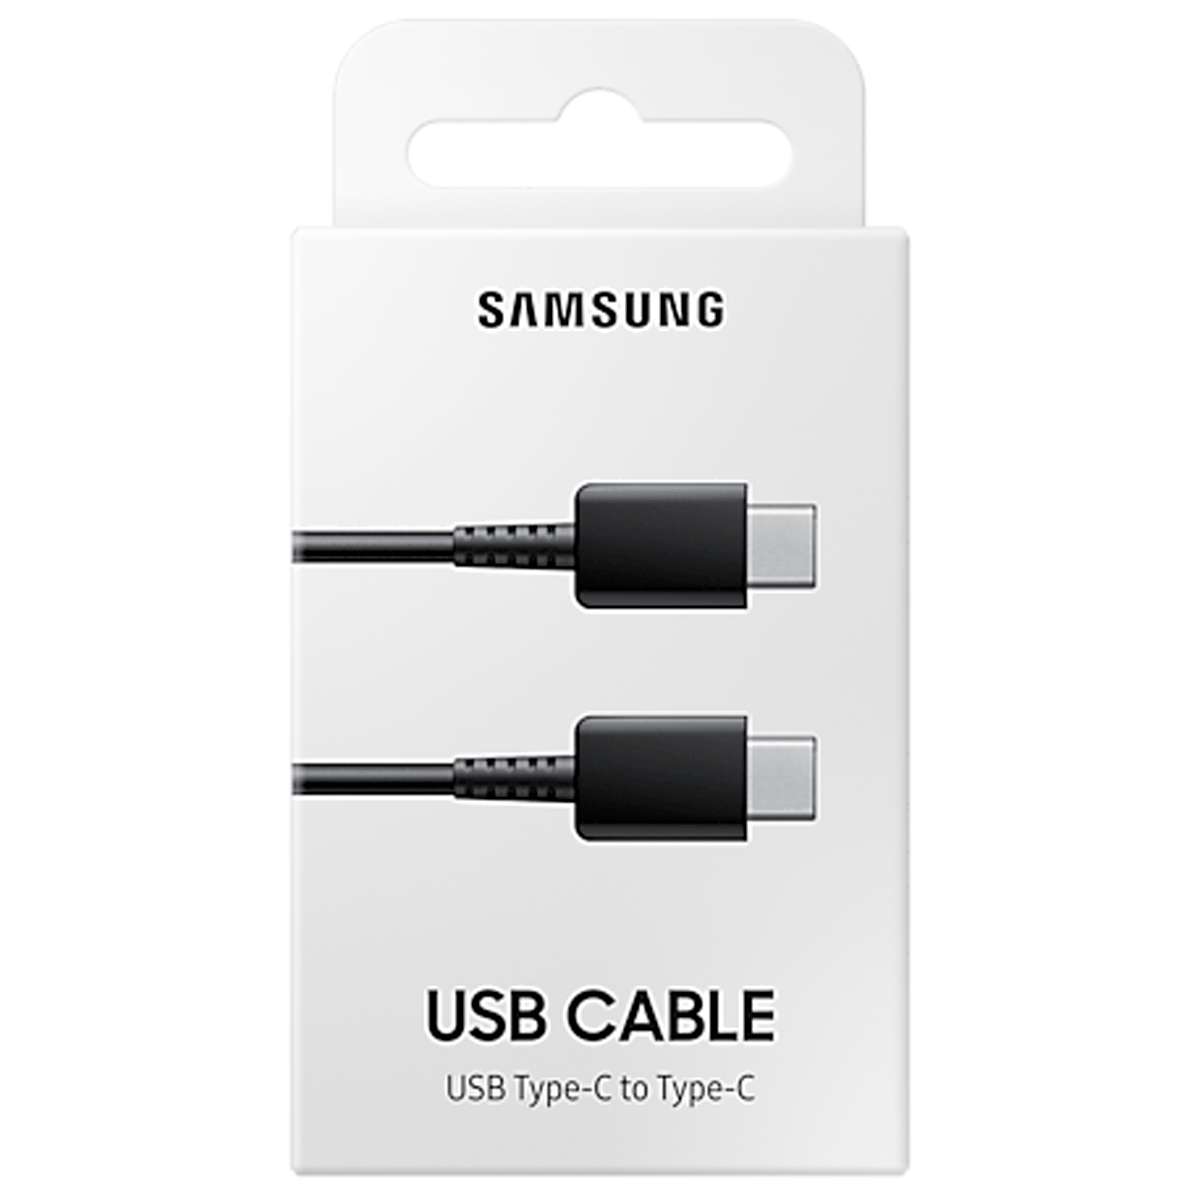 EP-DA705BBEGWW samsung                                                      | CABLE USB SAMSUNG ORIGINAL MAX 3A USB 2.0 TIPO C A NEGRO                                                                                                                                                                                                  